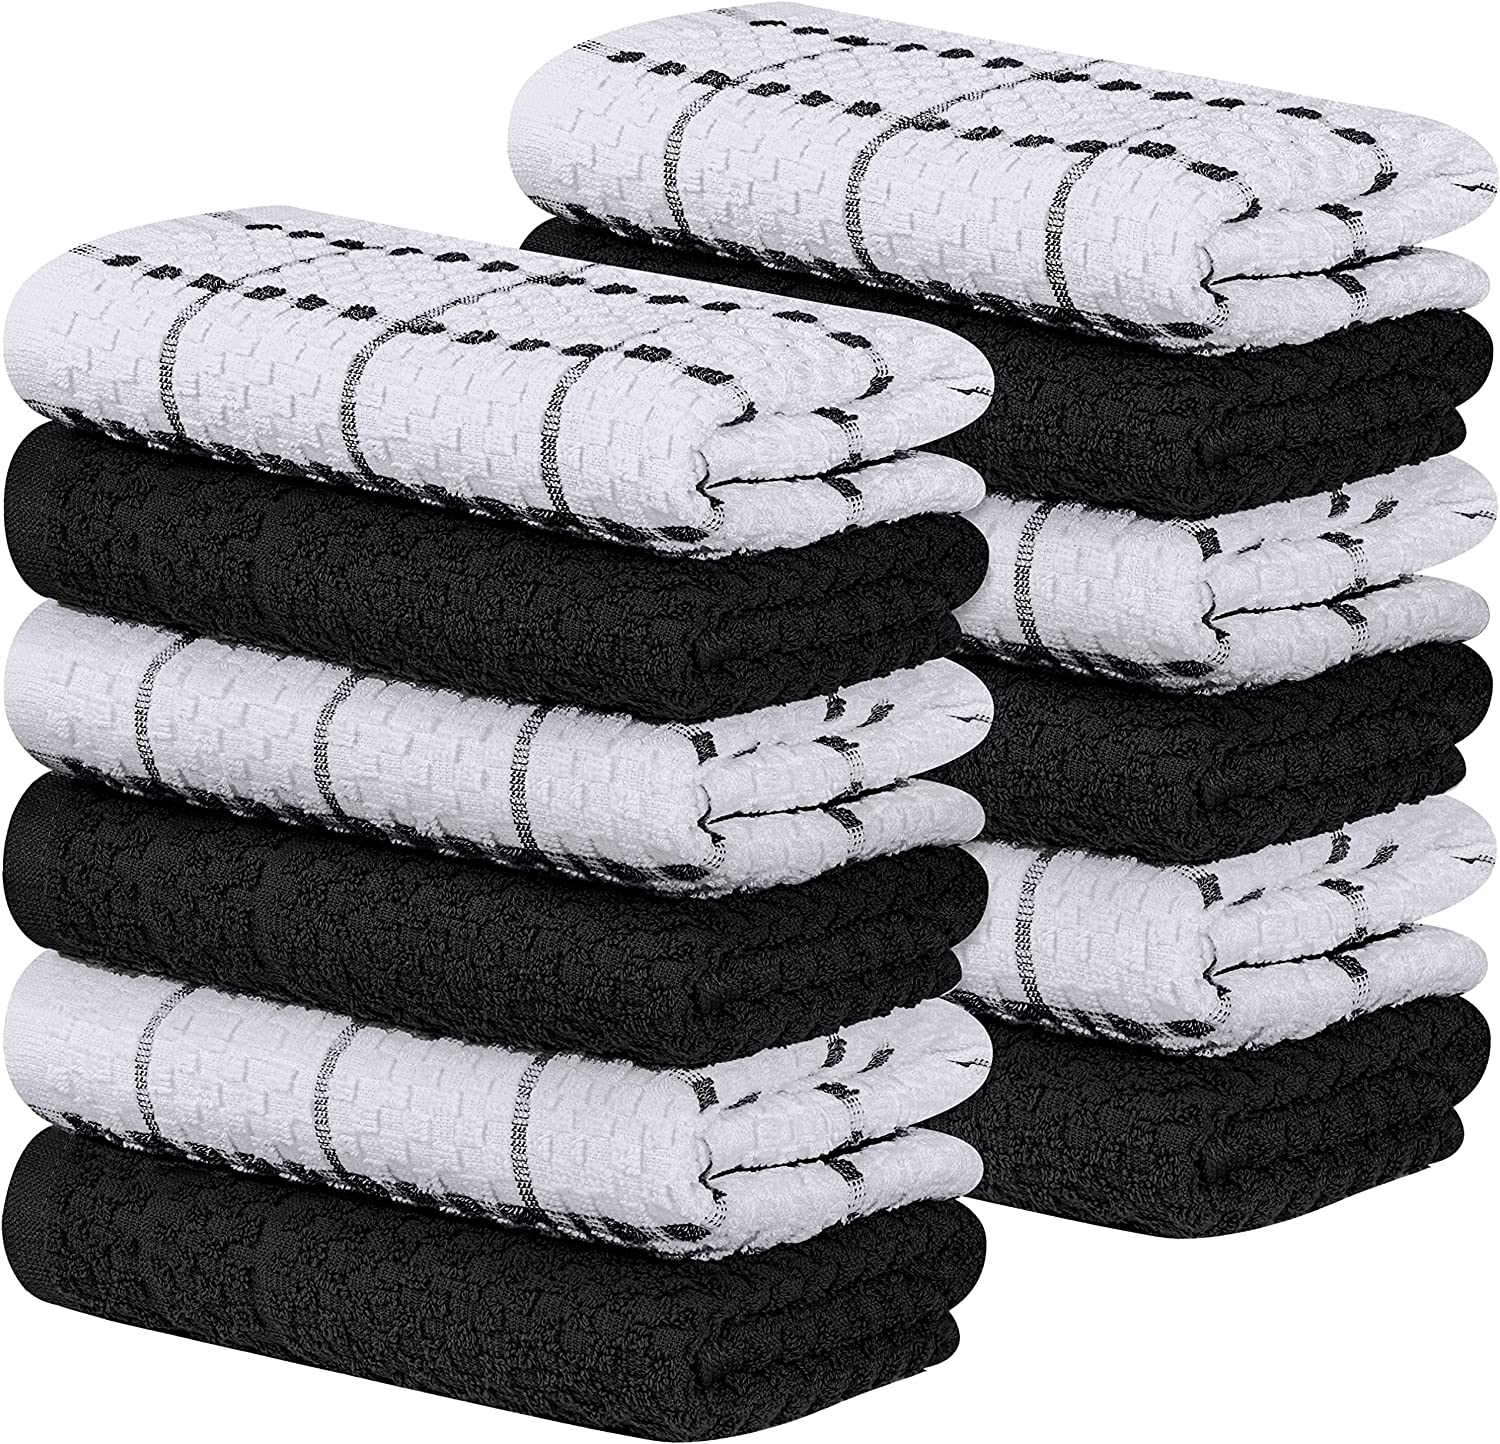 https://www.dontwasteyourmoney.com/wp-content/uploads/2019/10/utopia-soft-absorbent-ring-spun-cotton-dish-towel-12-pack-1.jpg